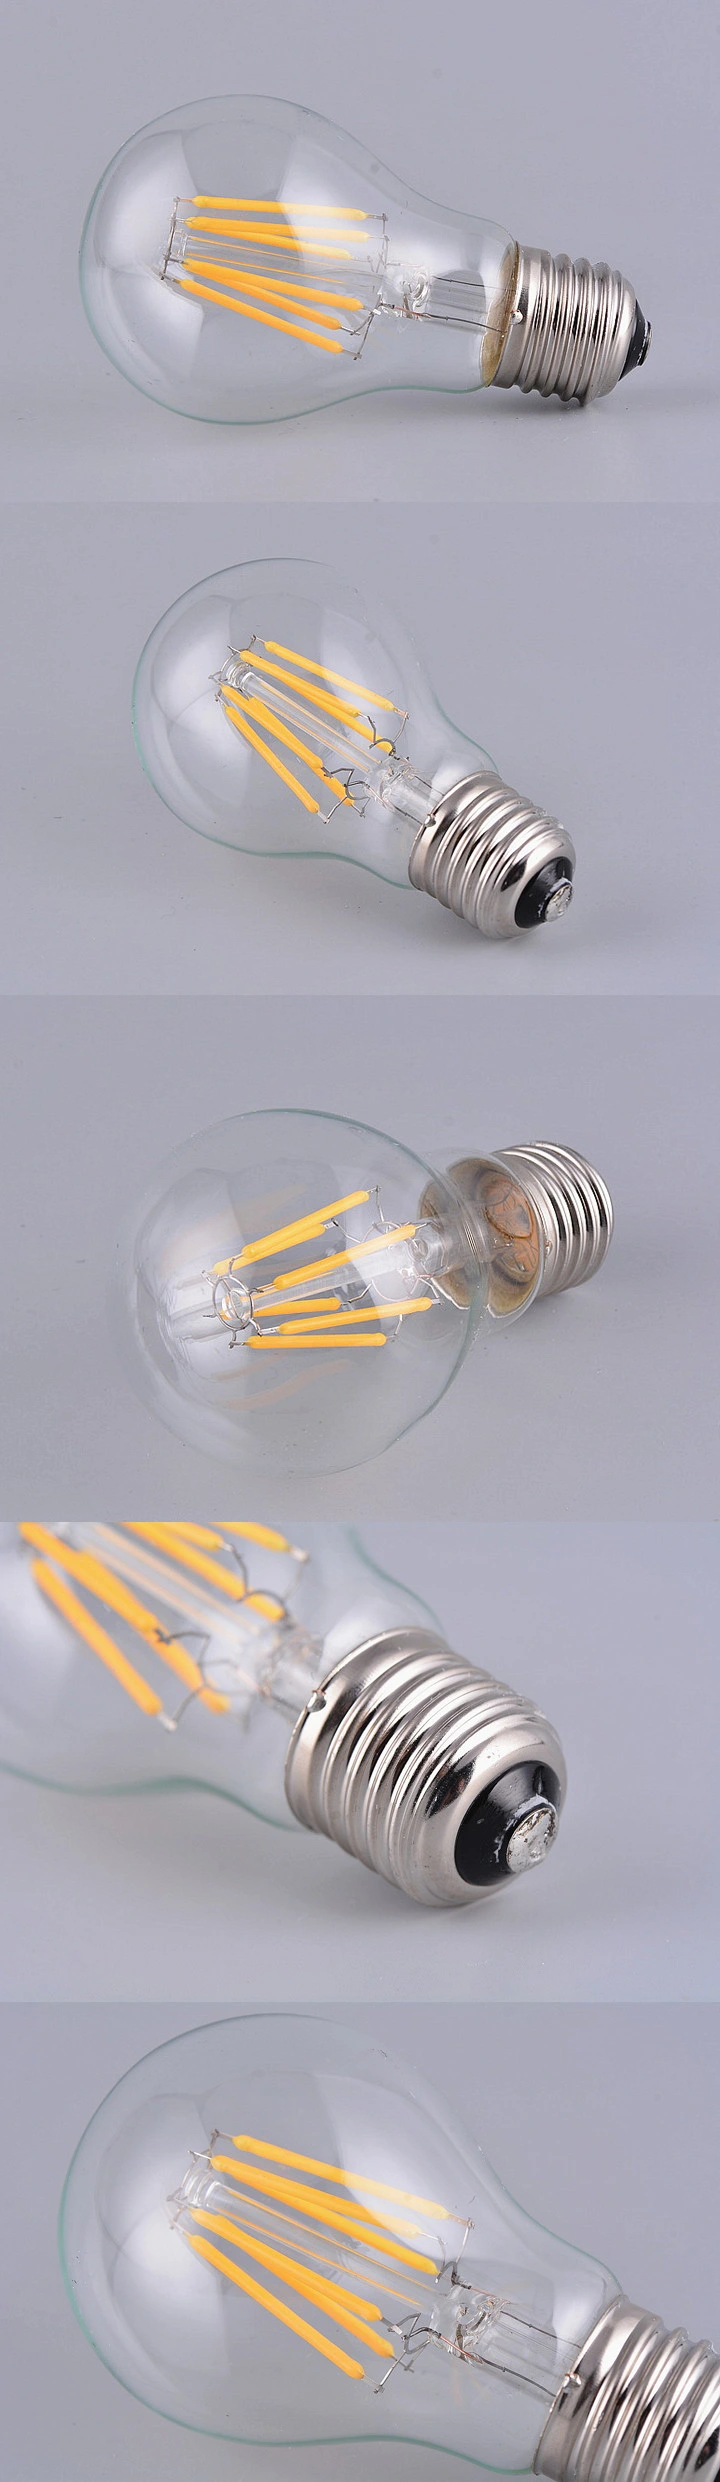 A60 6W Filament Warm White LED Bulb Price